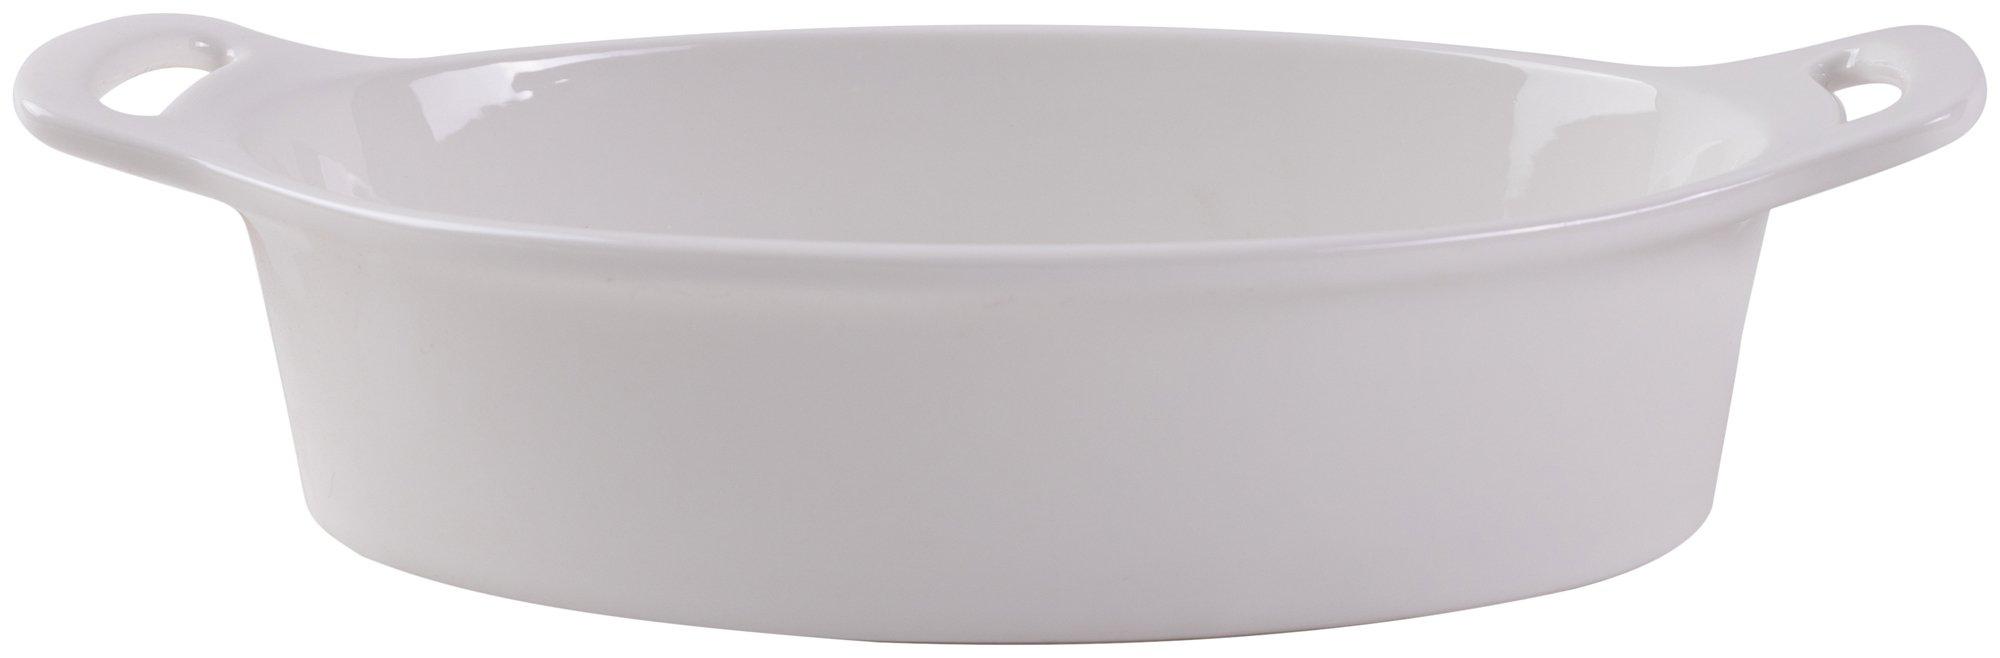 10.25x6 Oval Baking Dish